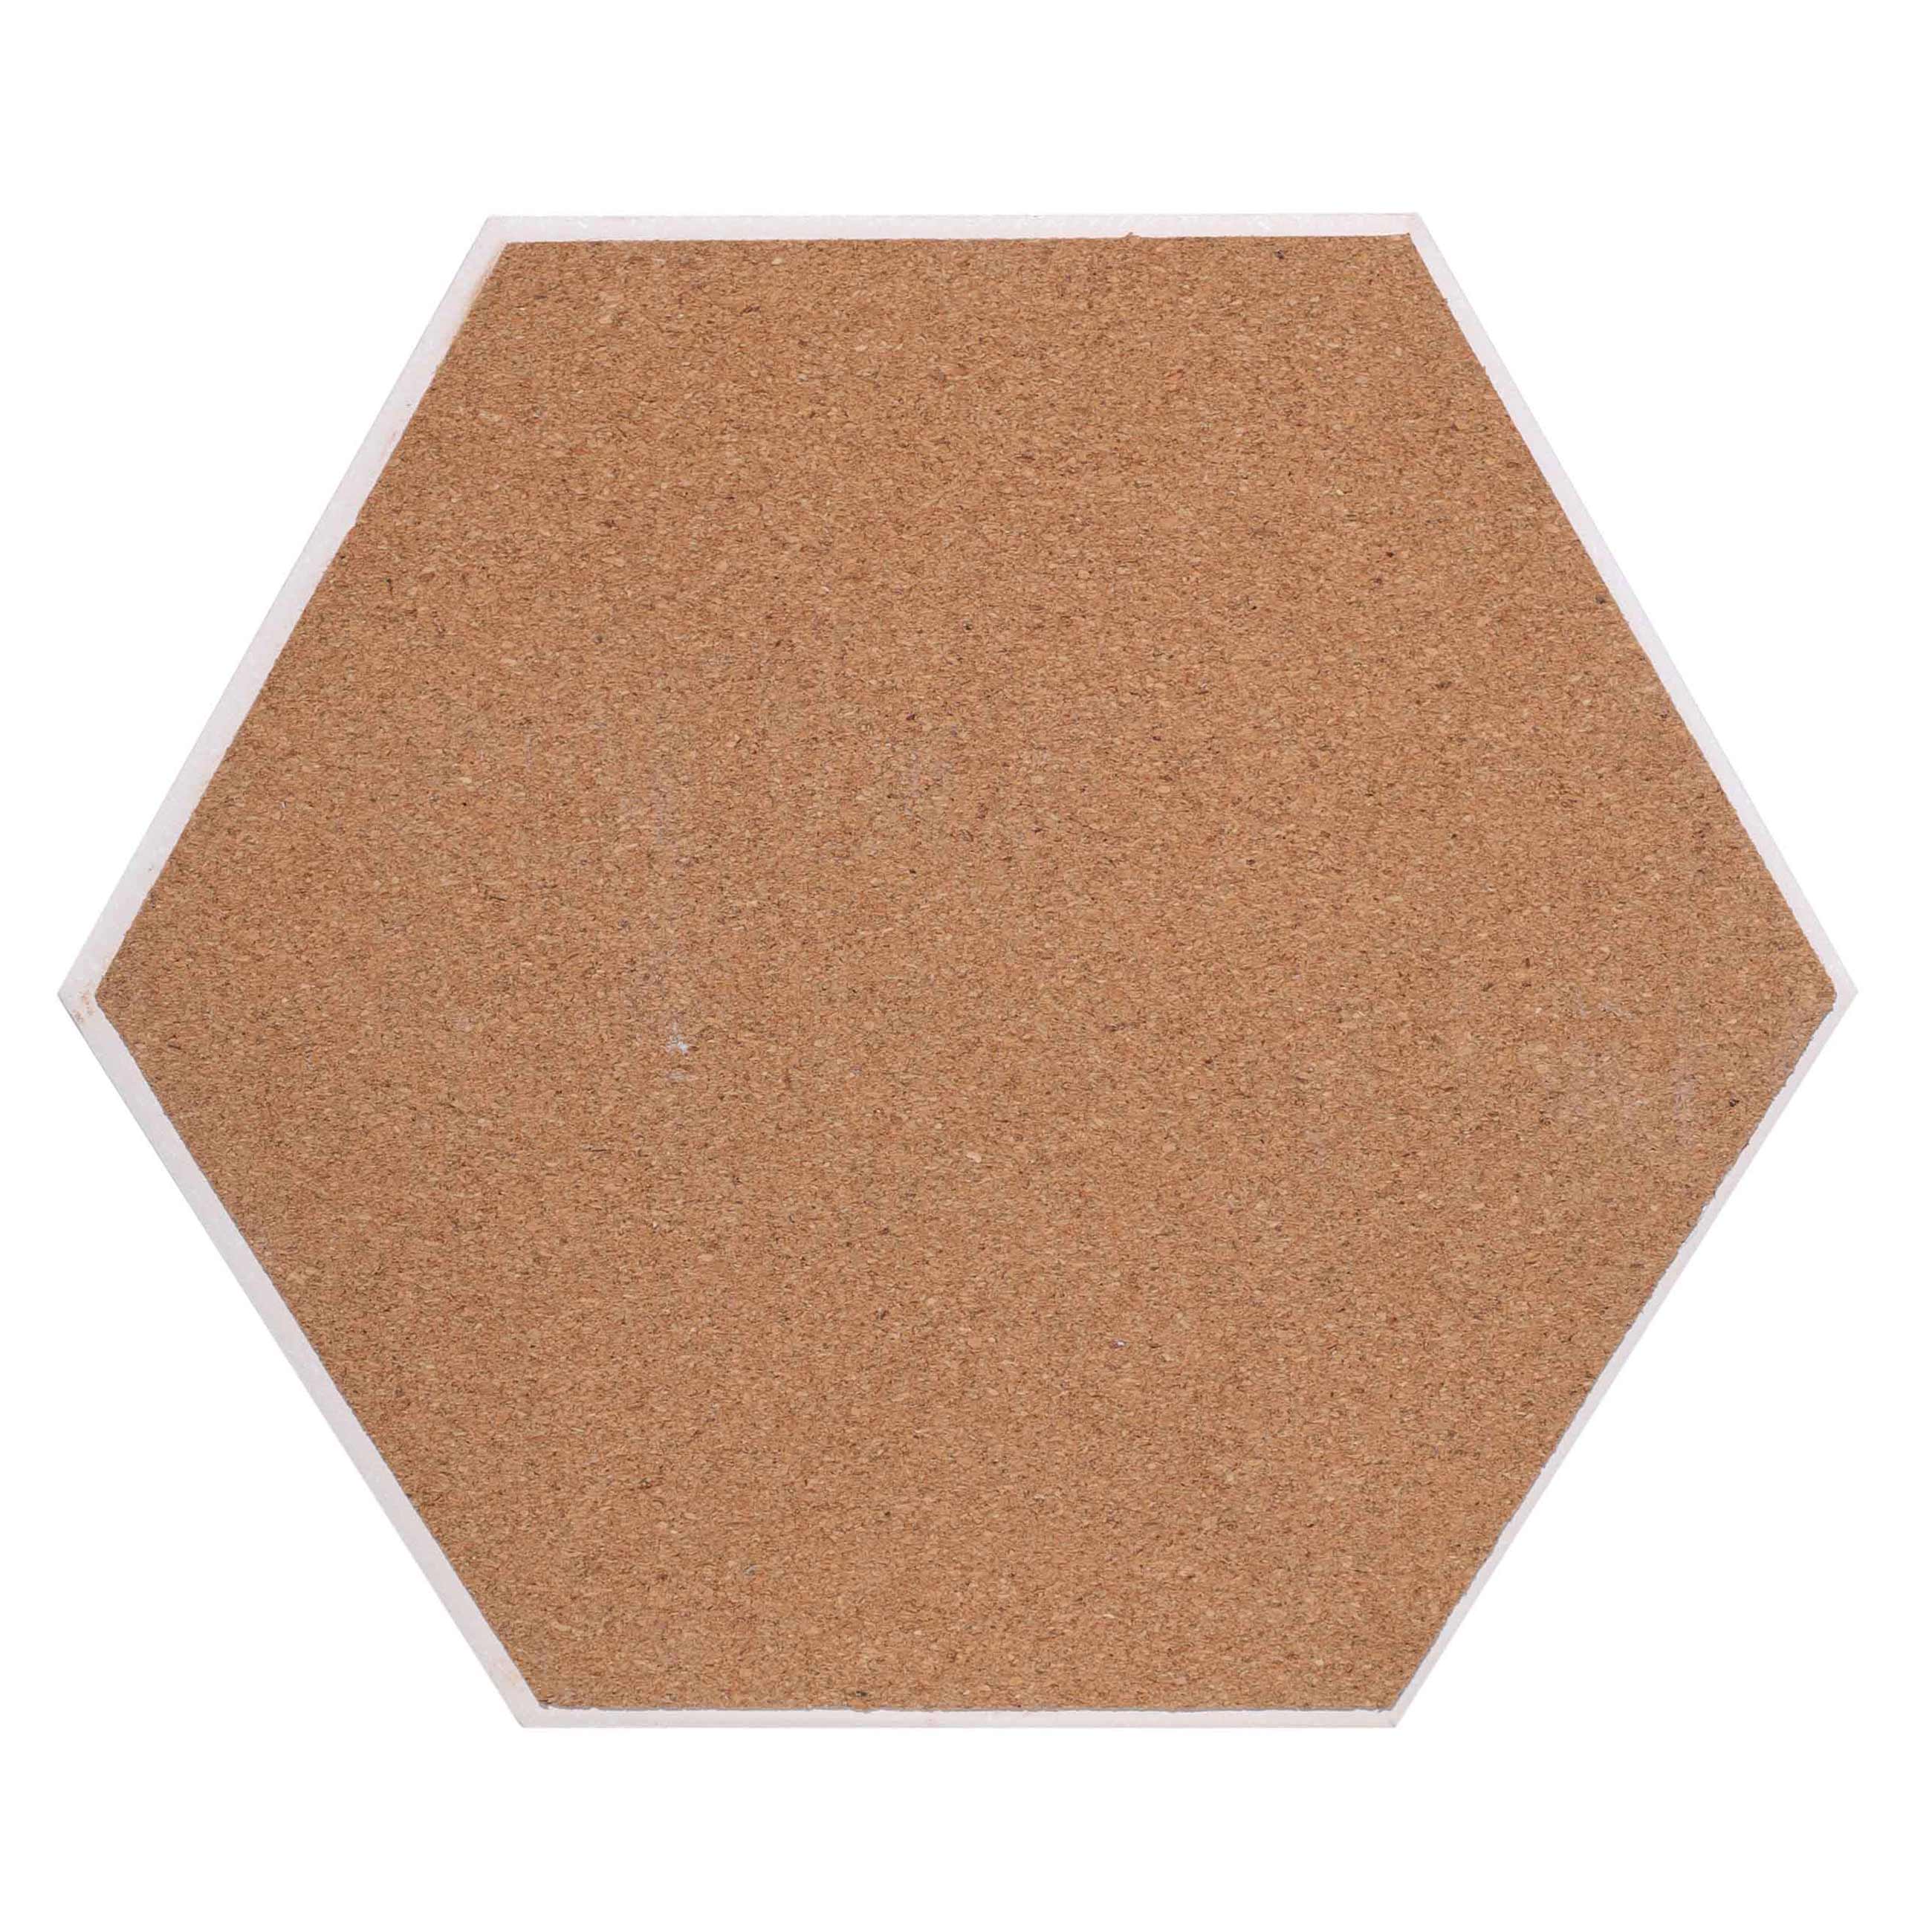 Hot plate, 20 cm, ceramic / cork, hexagonal, white, Bee, Honey изображение № 2